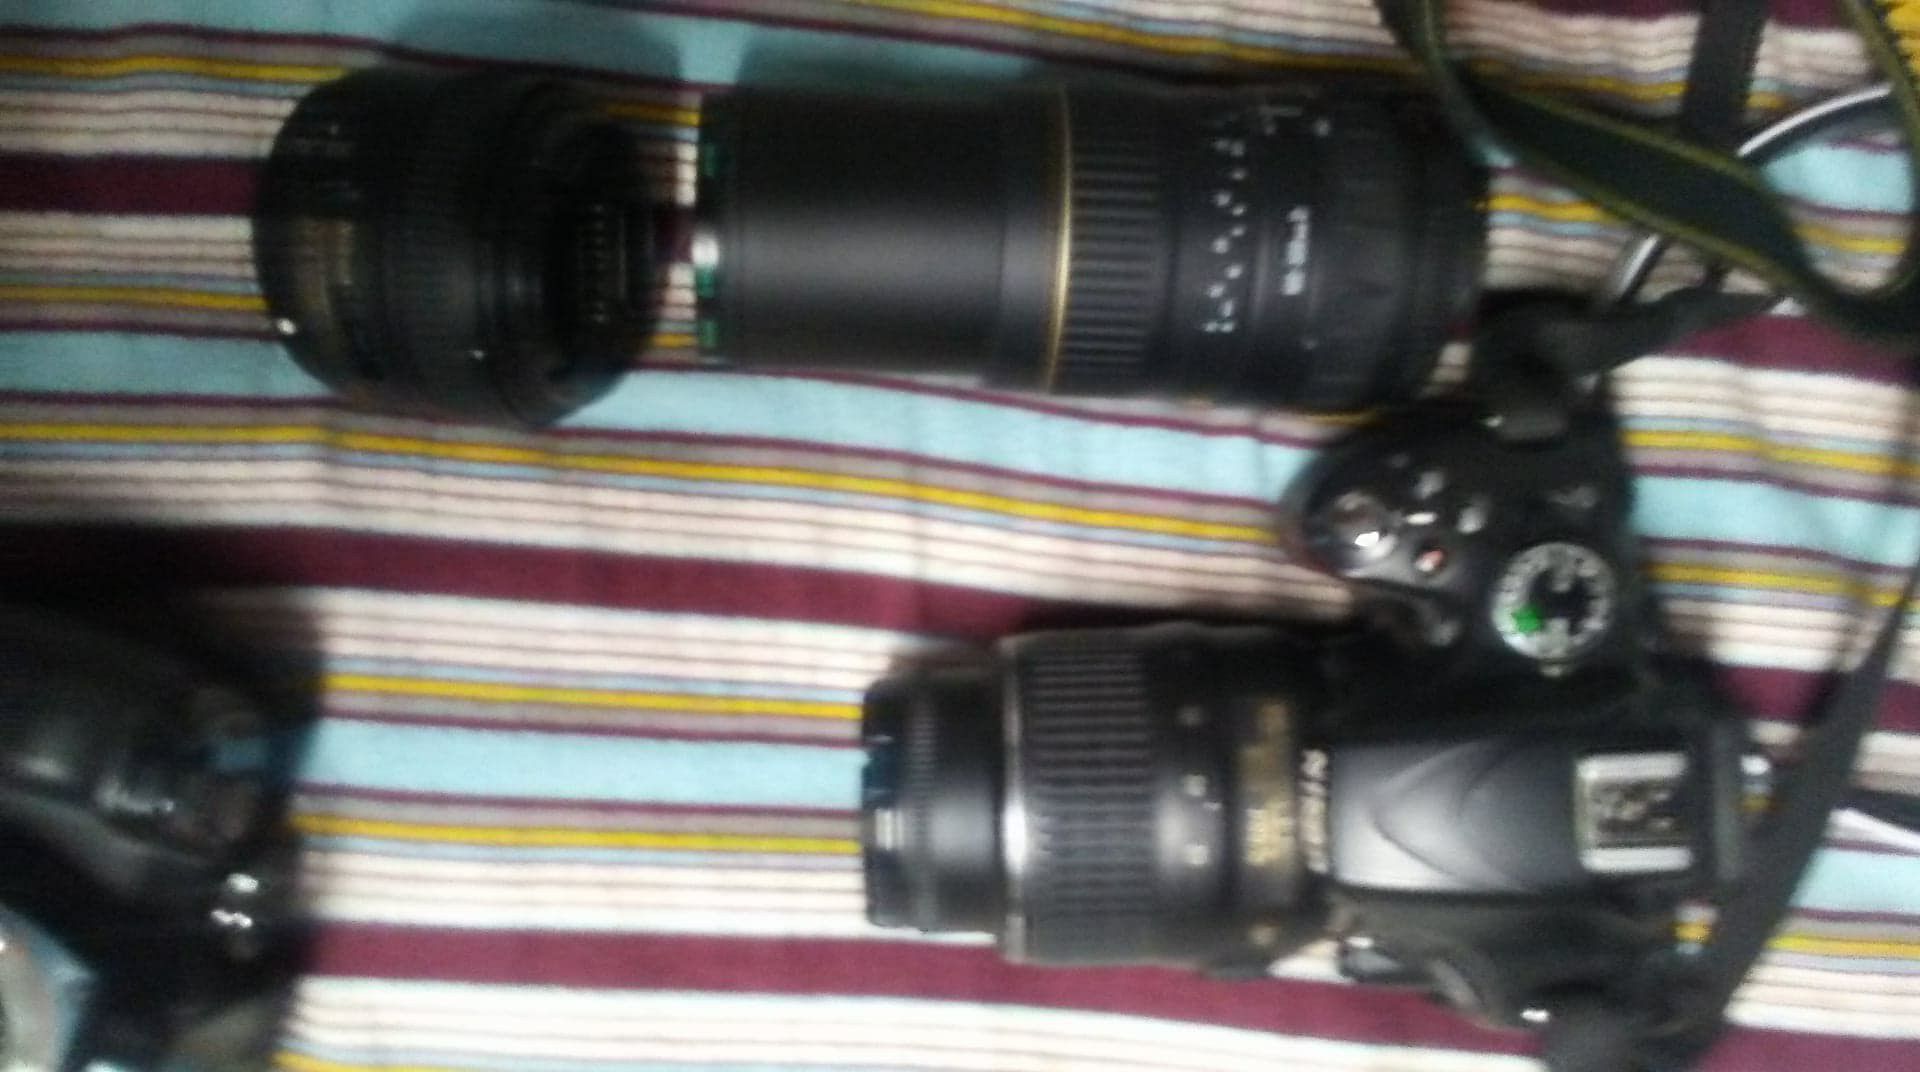 nikon camera with lenses